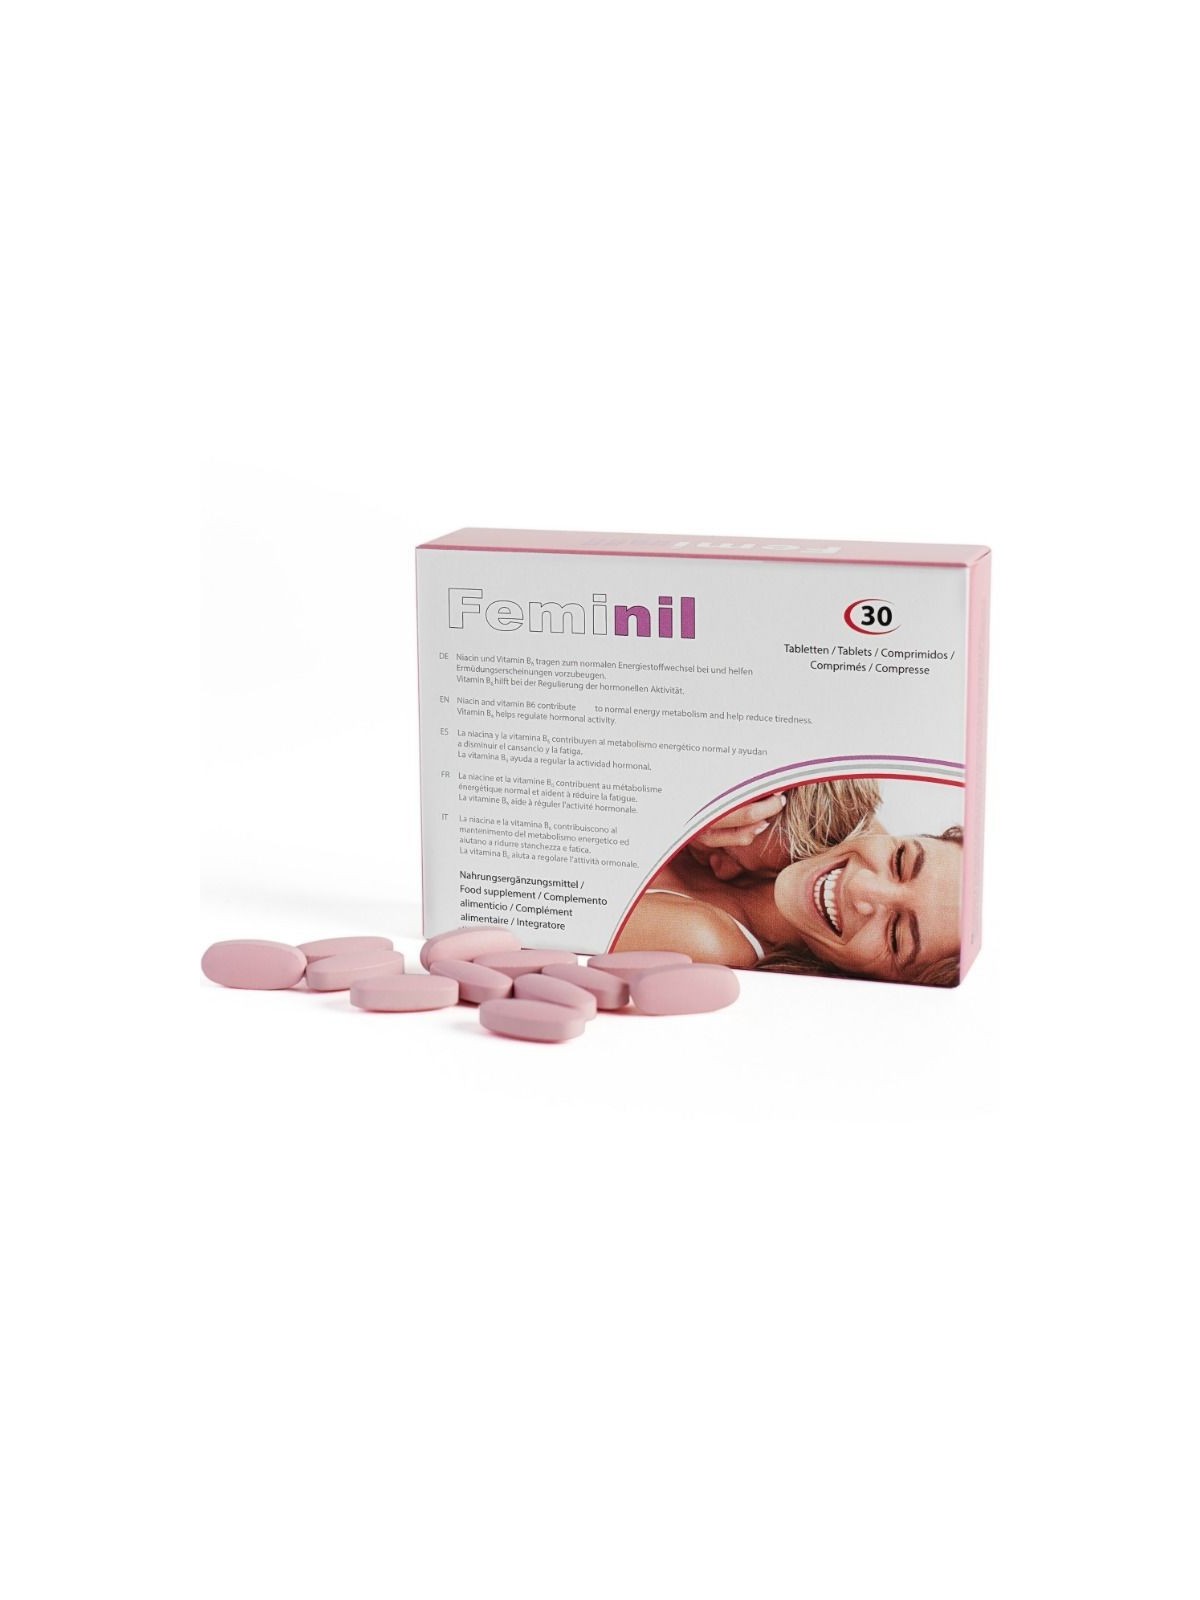 Feminil Pills Aumento Deseo Sexual Femenino - Comprar Gel estimulante mujer 500Cosmetics - Libido & orgasmo femenino (1)